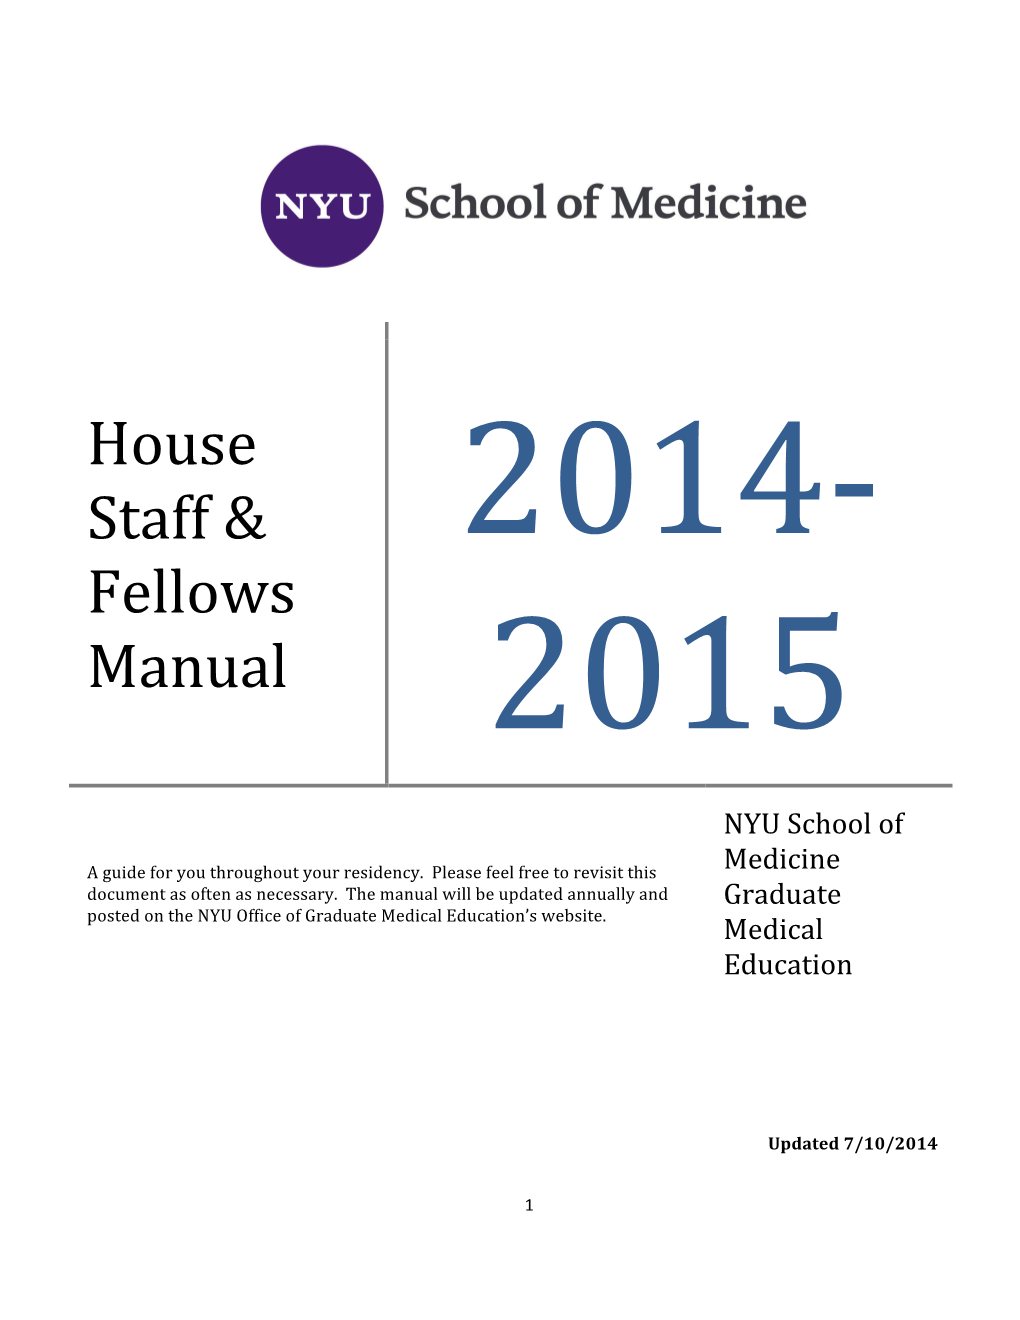 House Staff & Fellows Manual